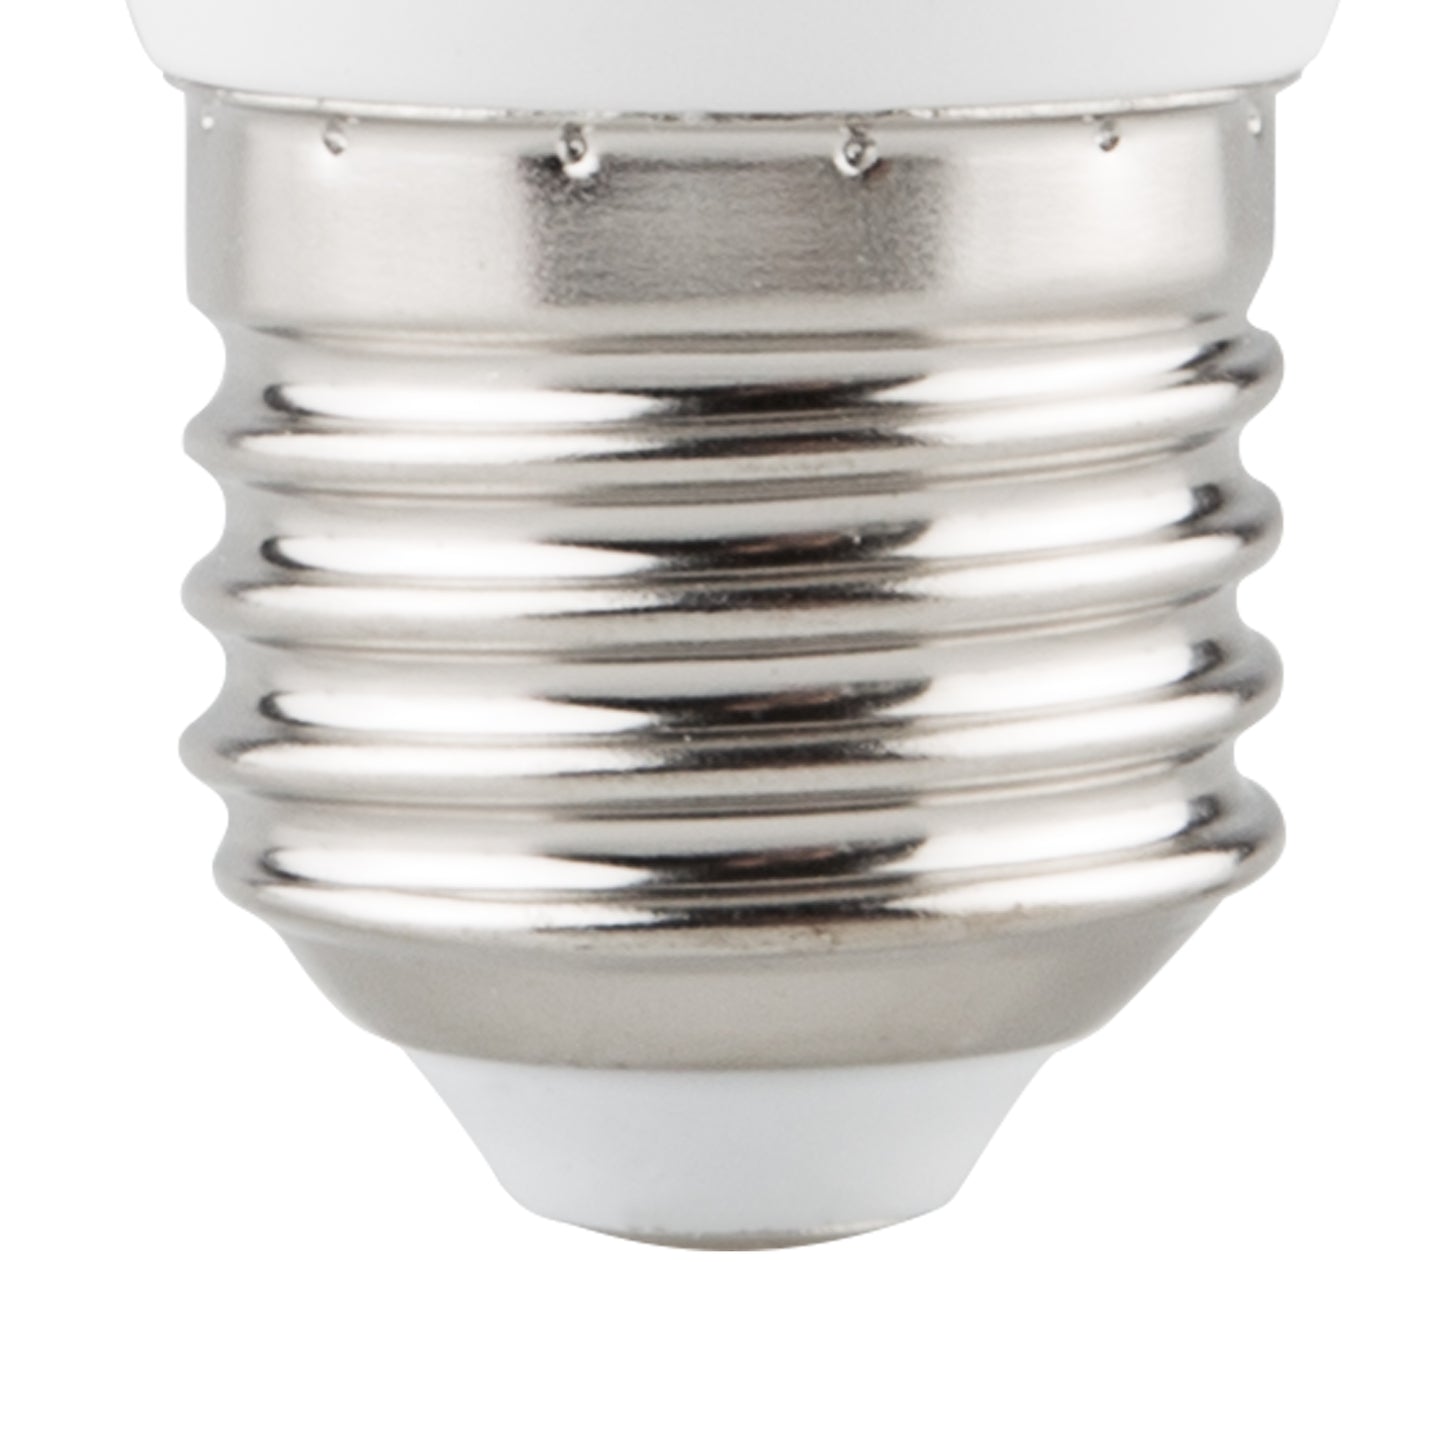 LED REFLECTOR LAMP MATEL SAMSUNG E27 R63 9W